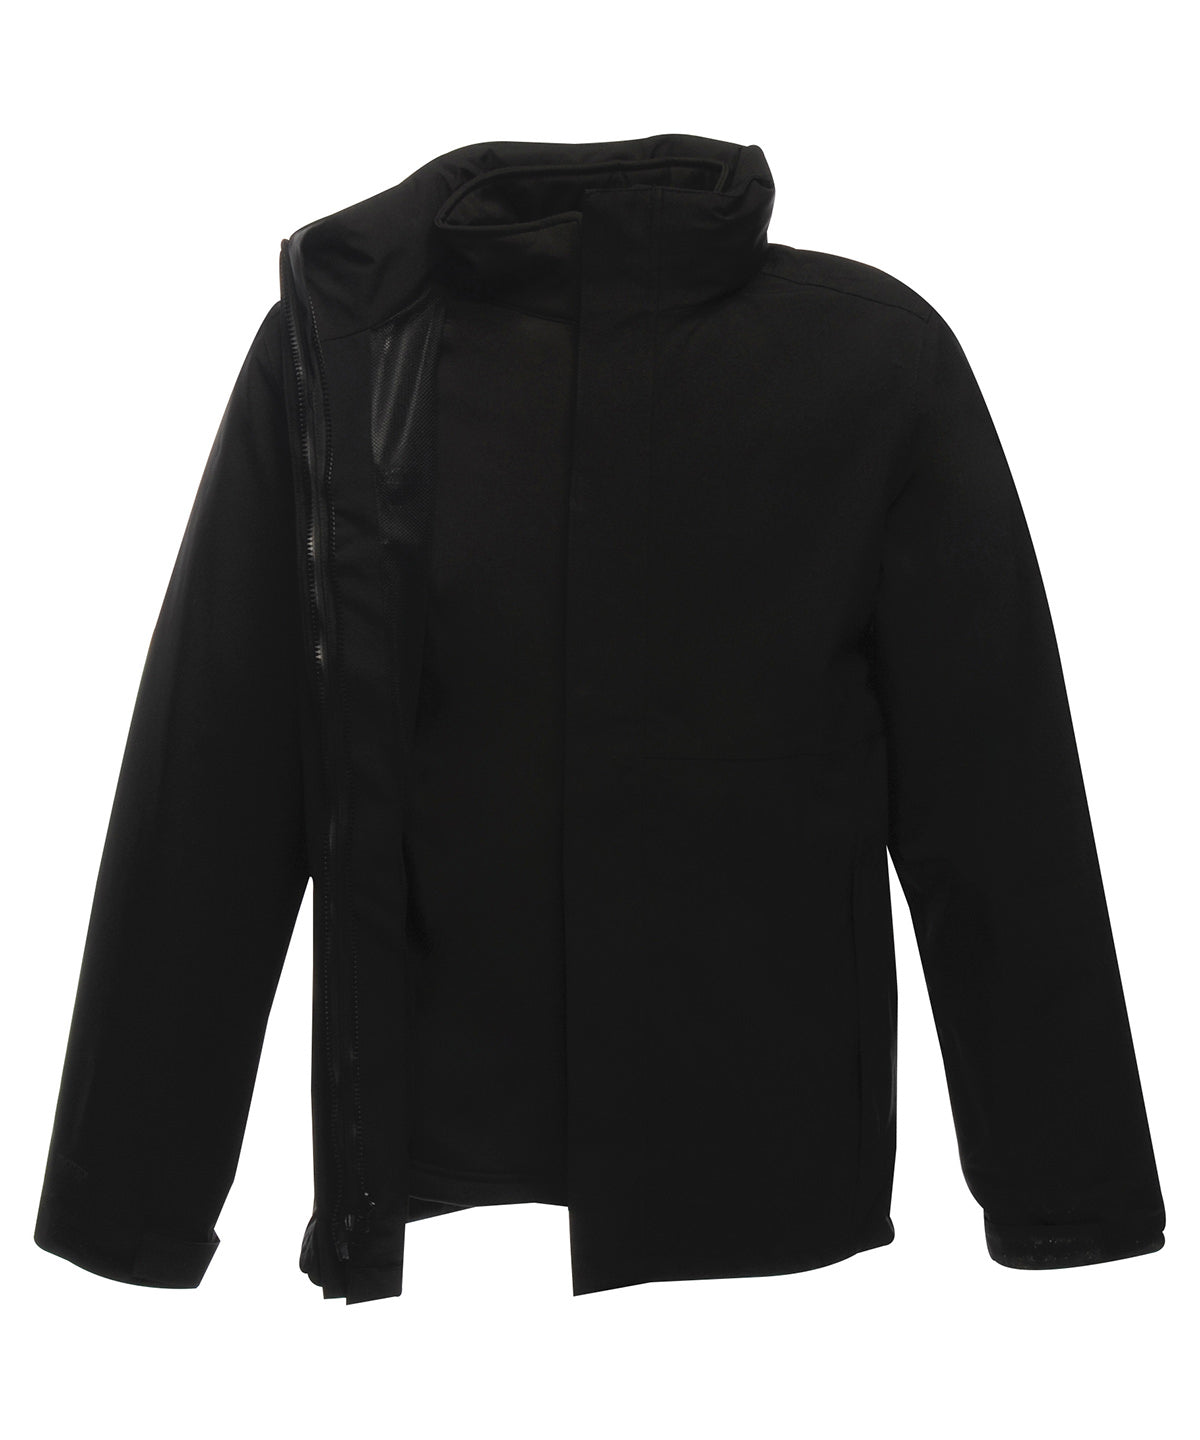 Personalised Jackets - Black Regatta Professional Kingsley 3-in-1 jacket